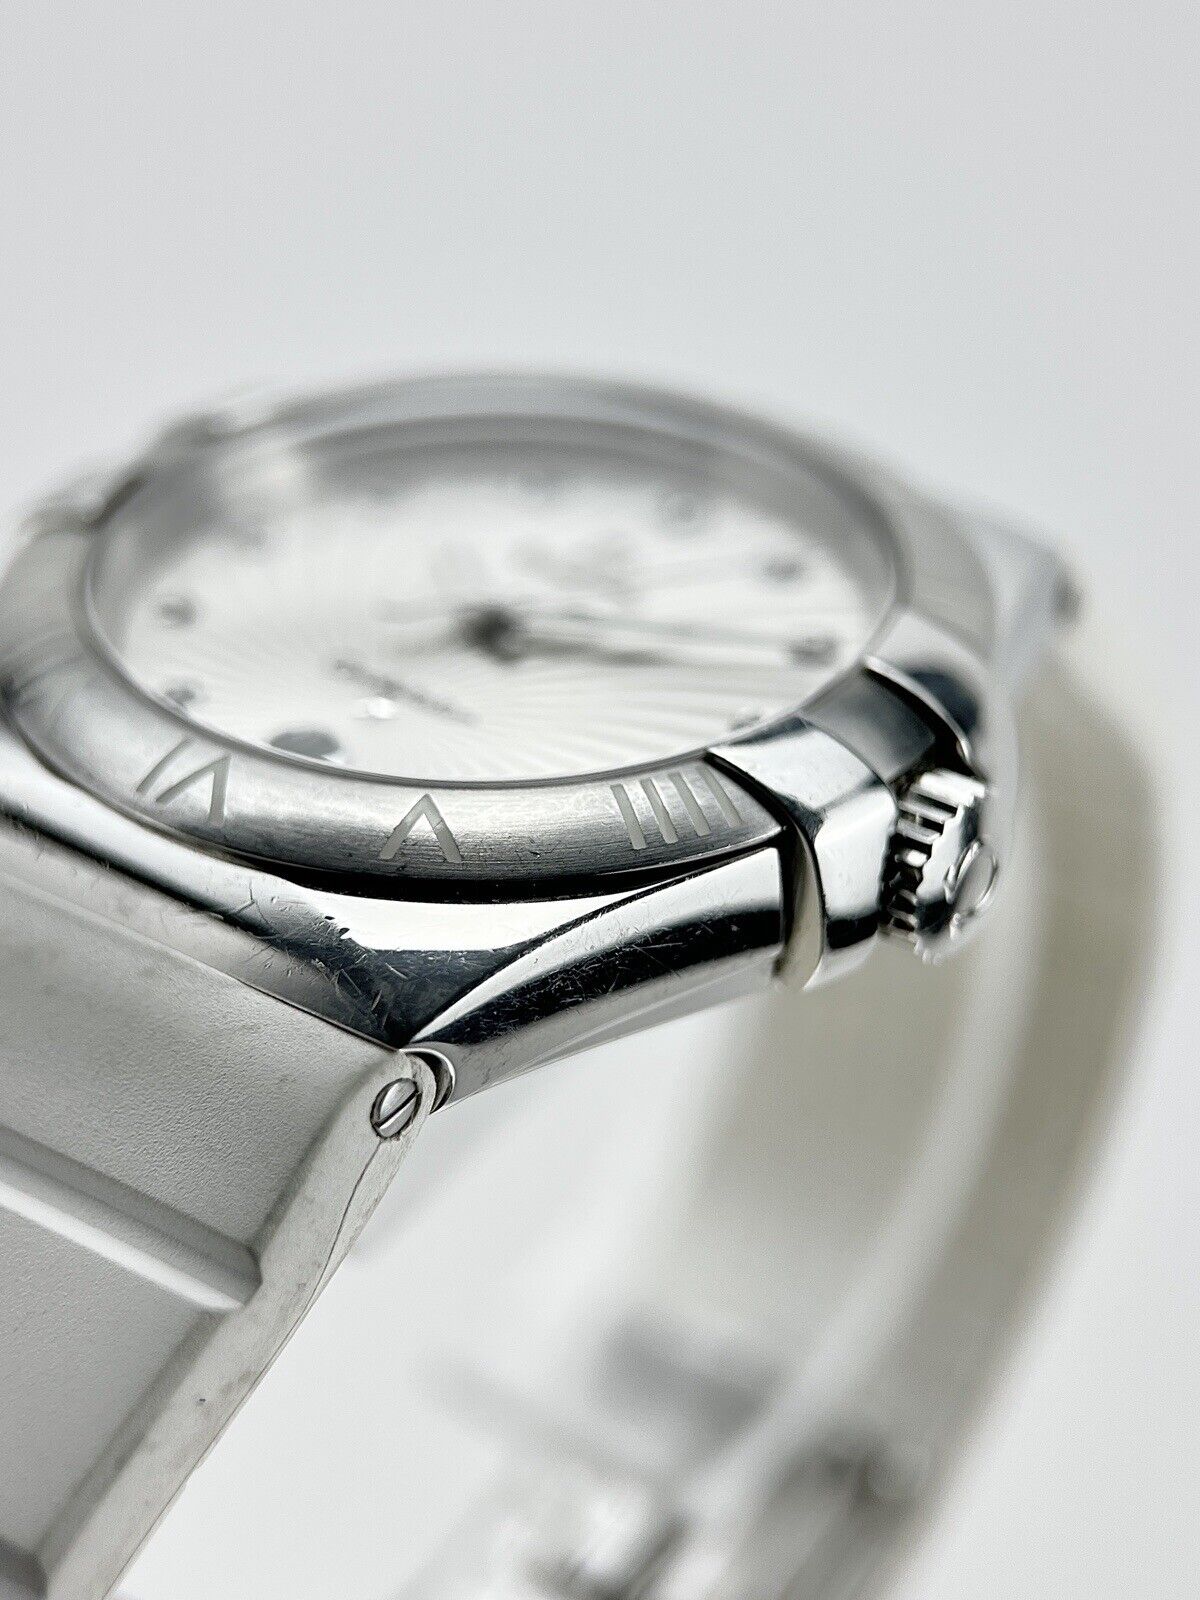 Omega Watch Constellation White Dial Diamond 123.12.35.60.52.001 Quartz Movement